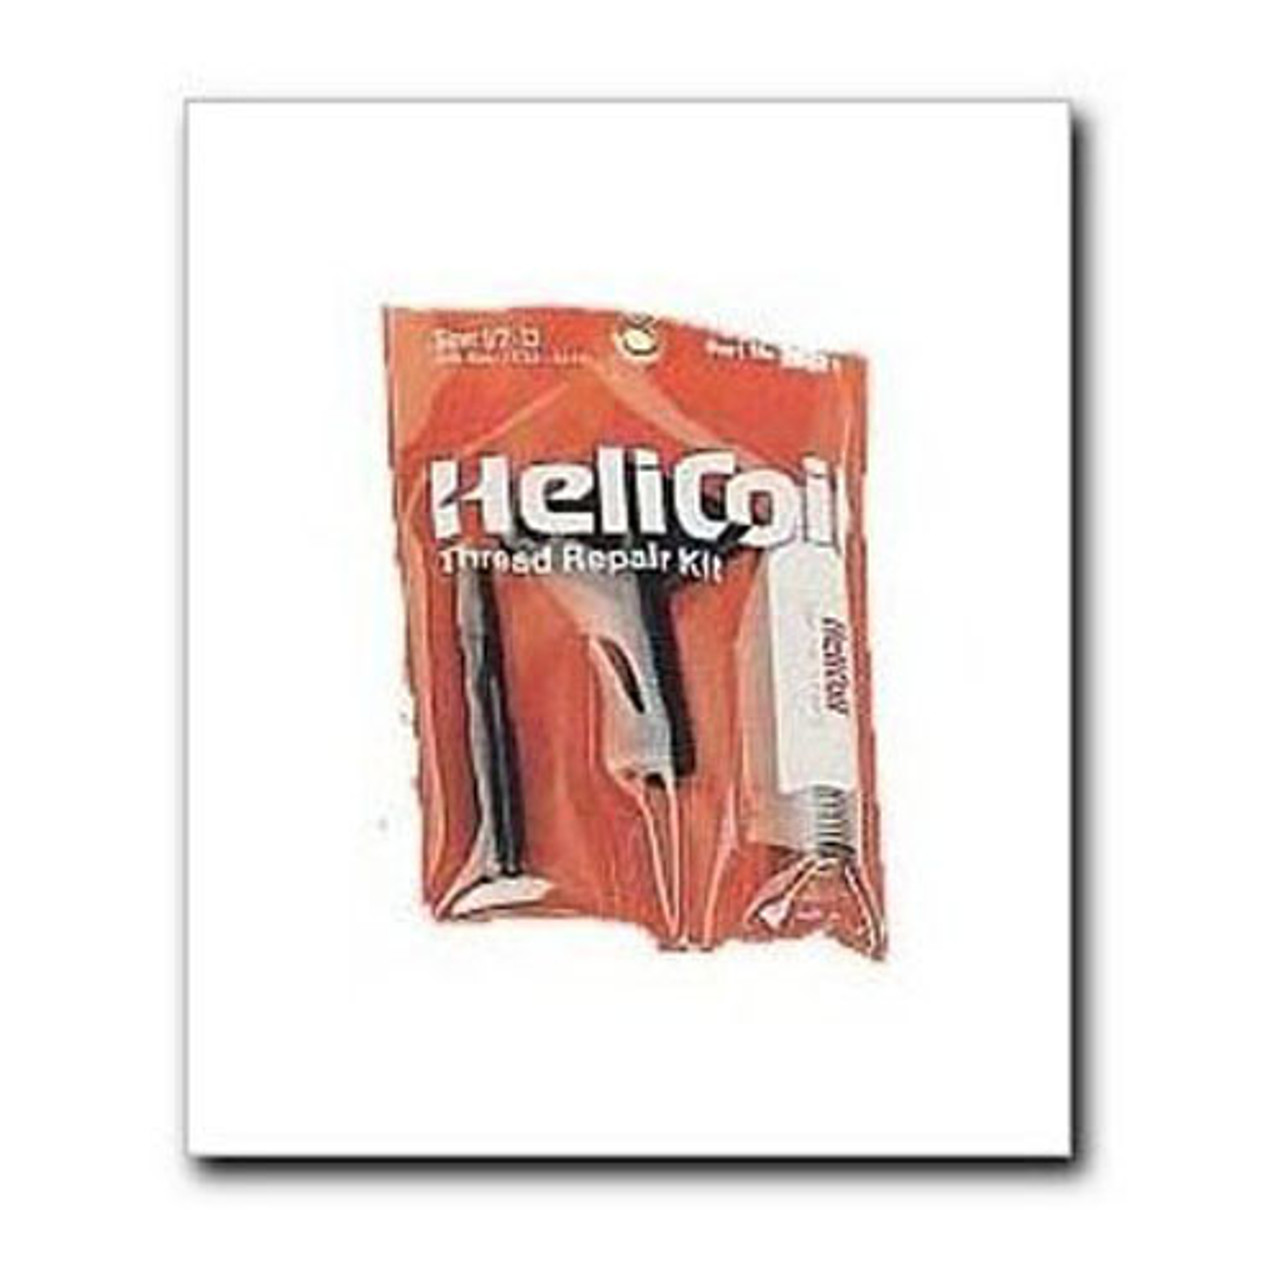 Helicoil 5546-9 Thread Repair Kit